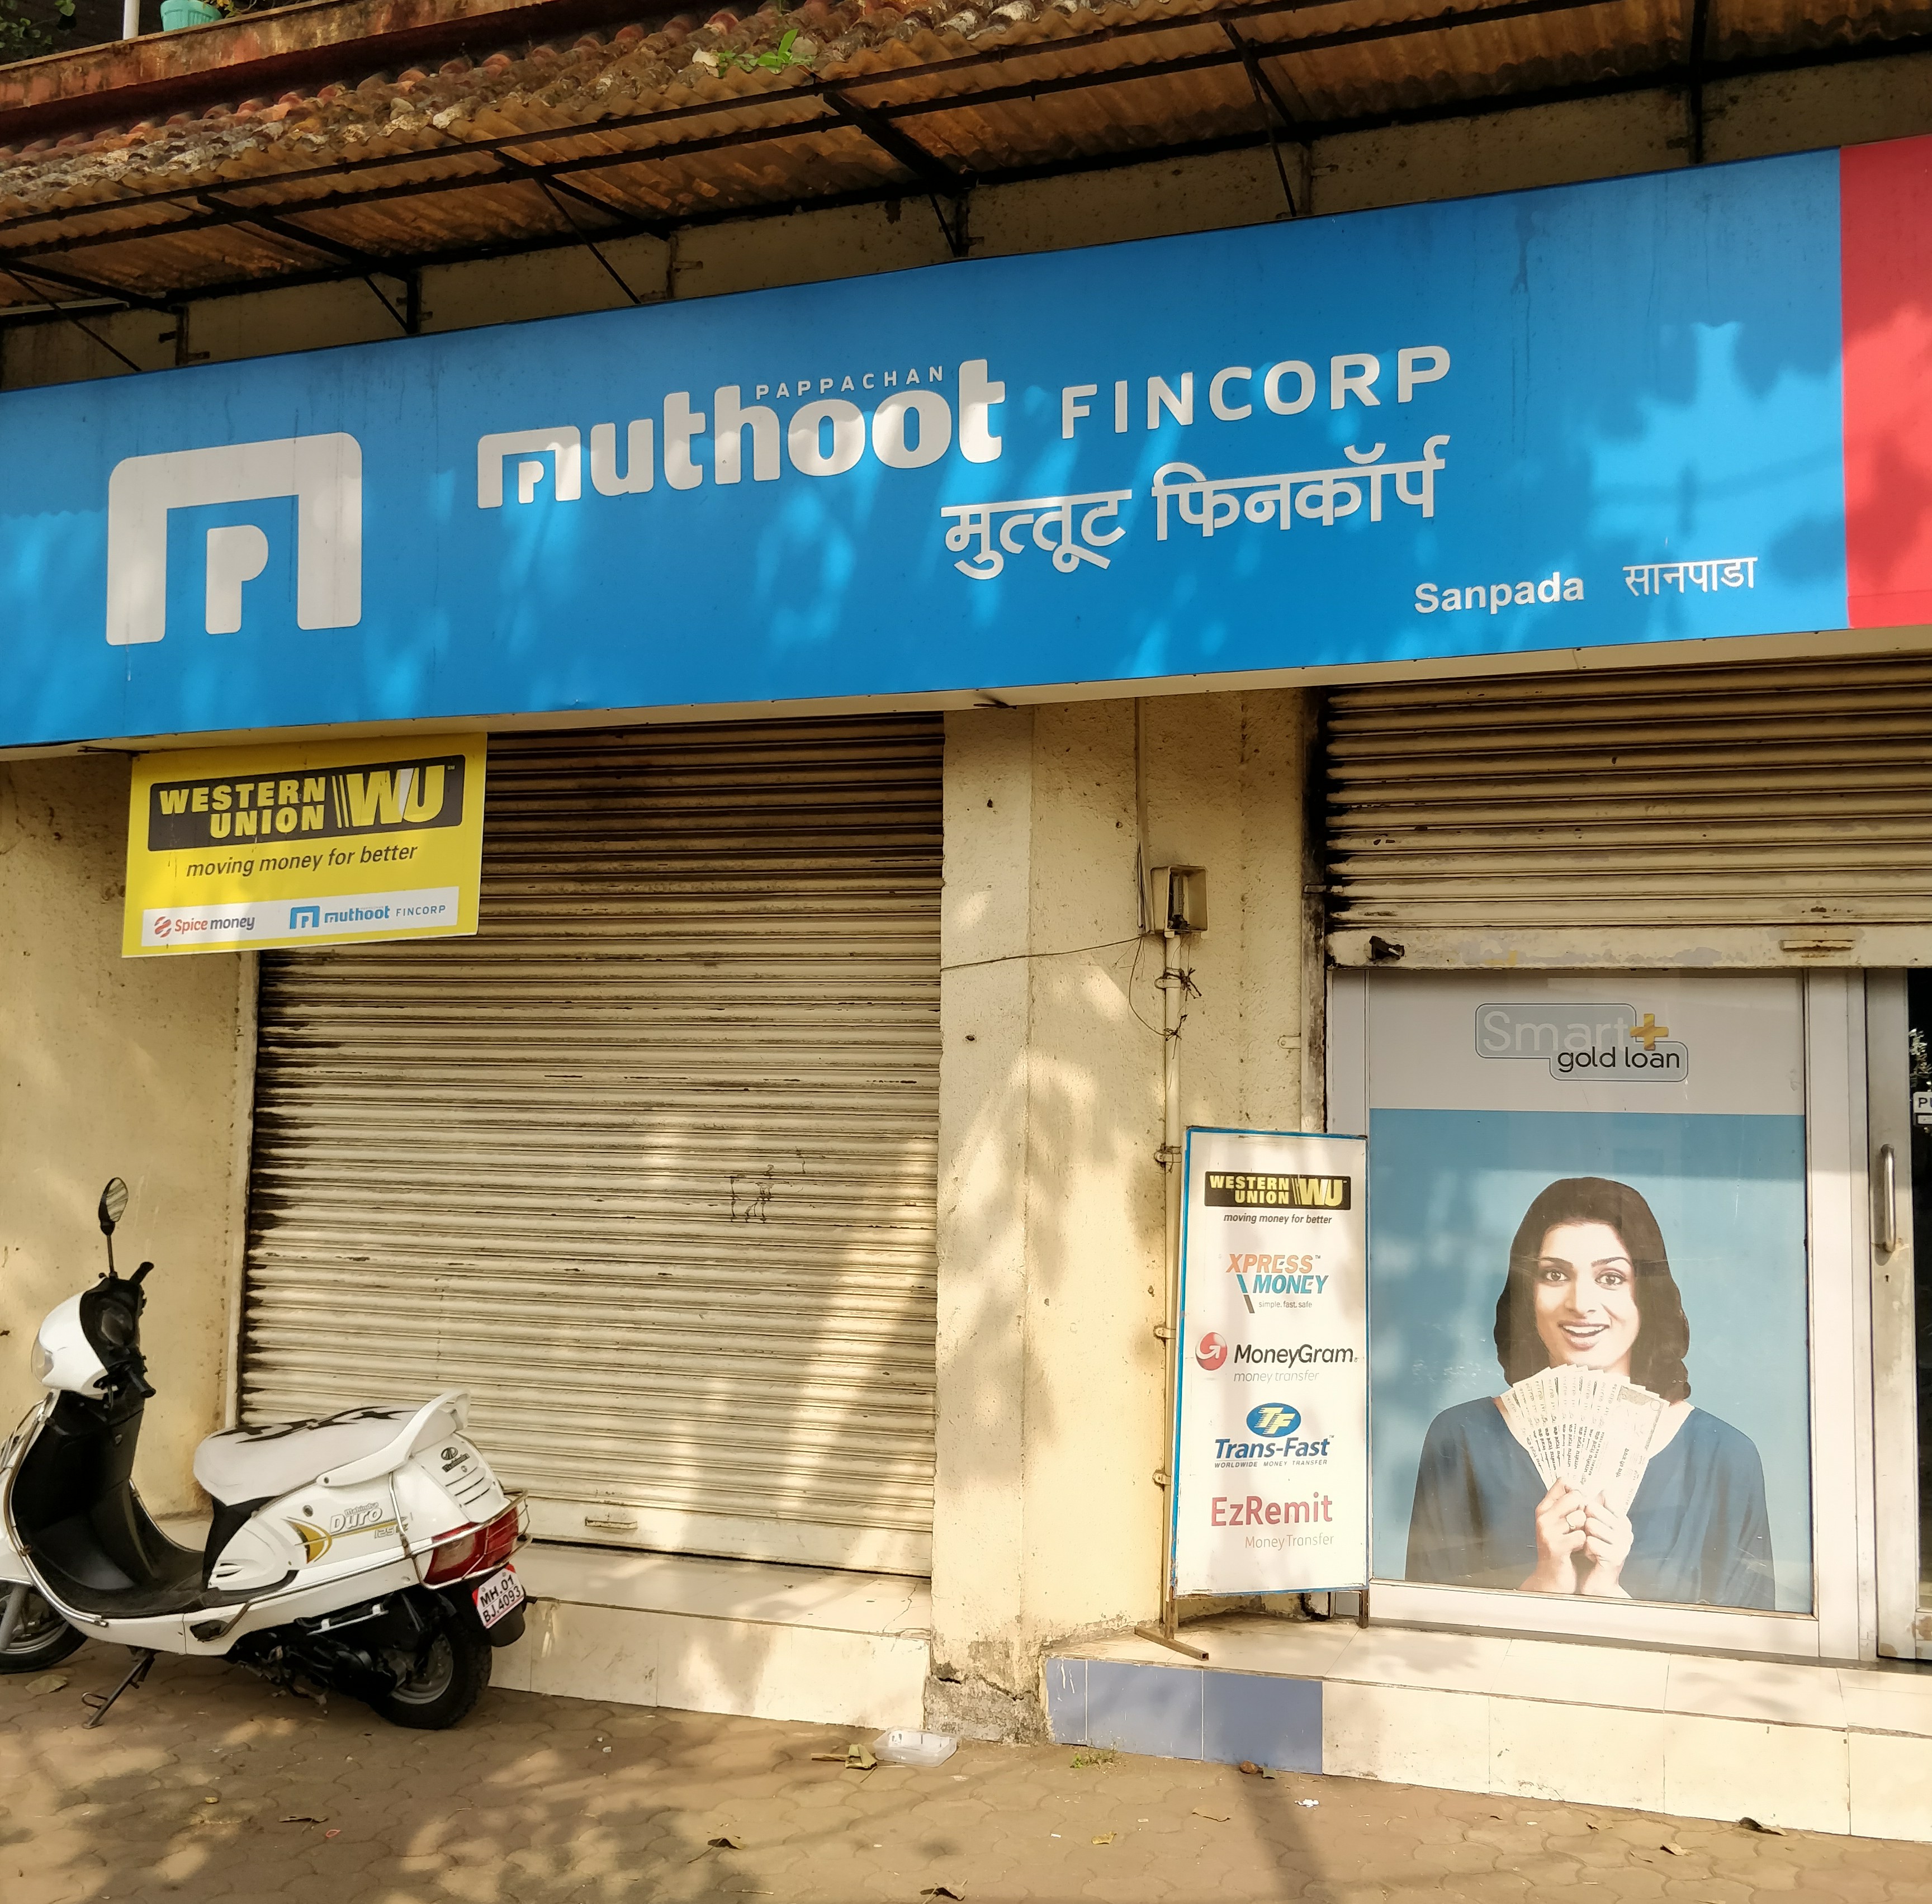 Muthoot Fincorp Gold Loan Services in Sanpada, Sector 14, Navi Mumbai, Maharashtra